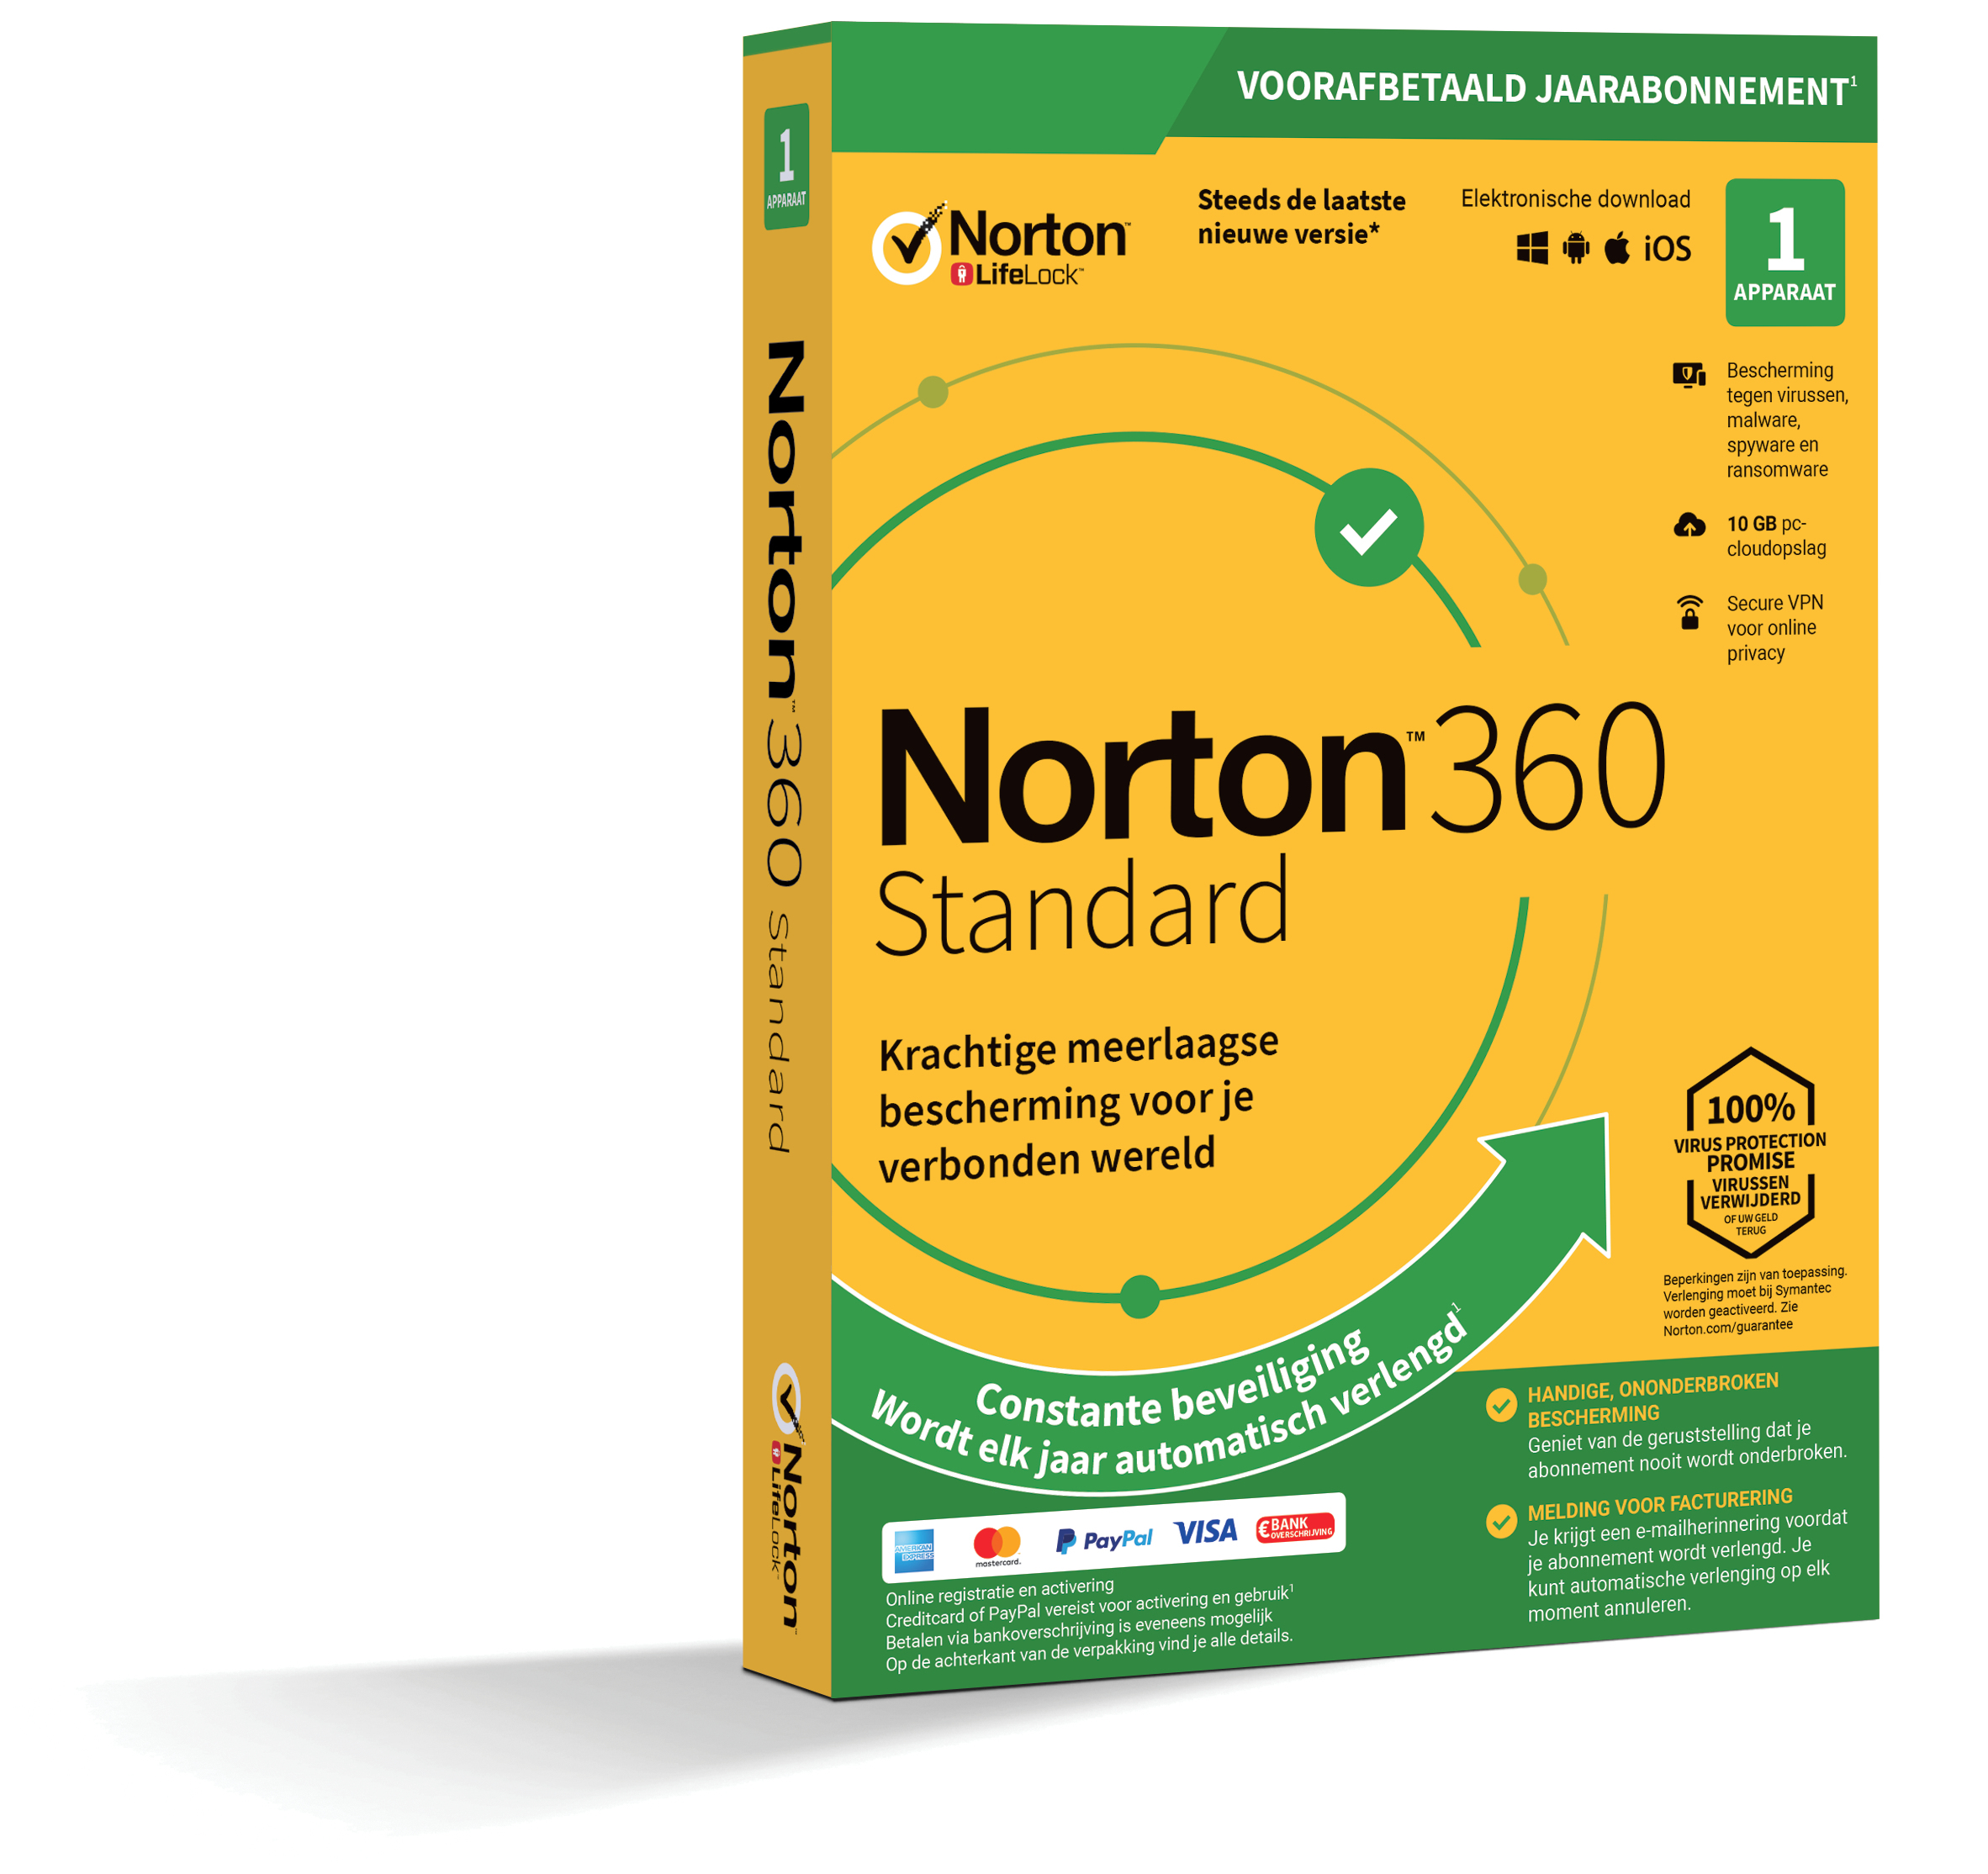 Norton 360 Standaard | 1Installatie - 1Jaar | Windows - Mac - Android - iOS | 10Gb Cloud backup